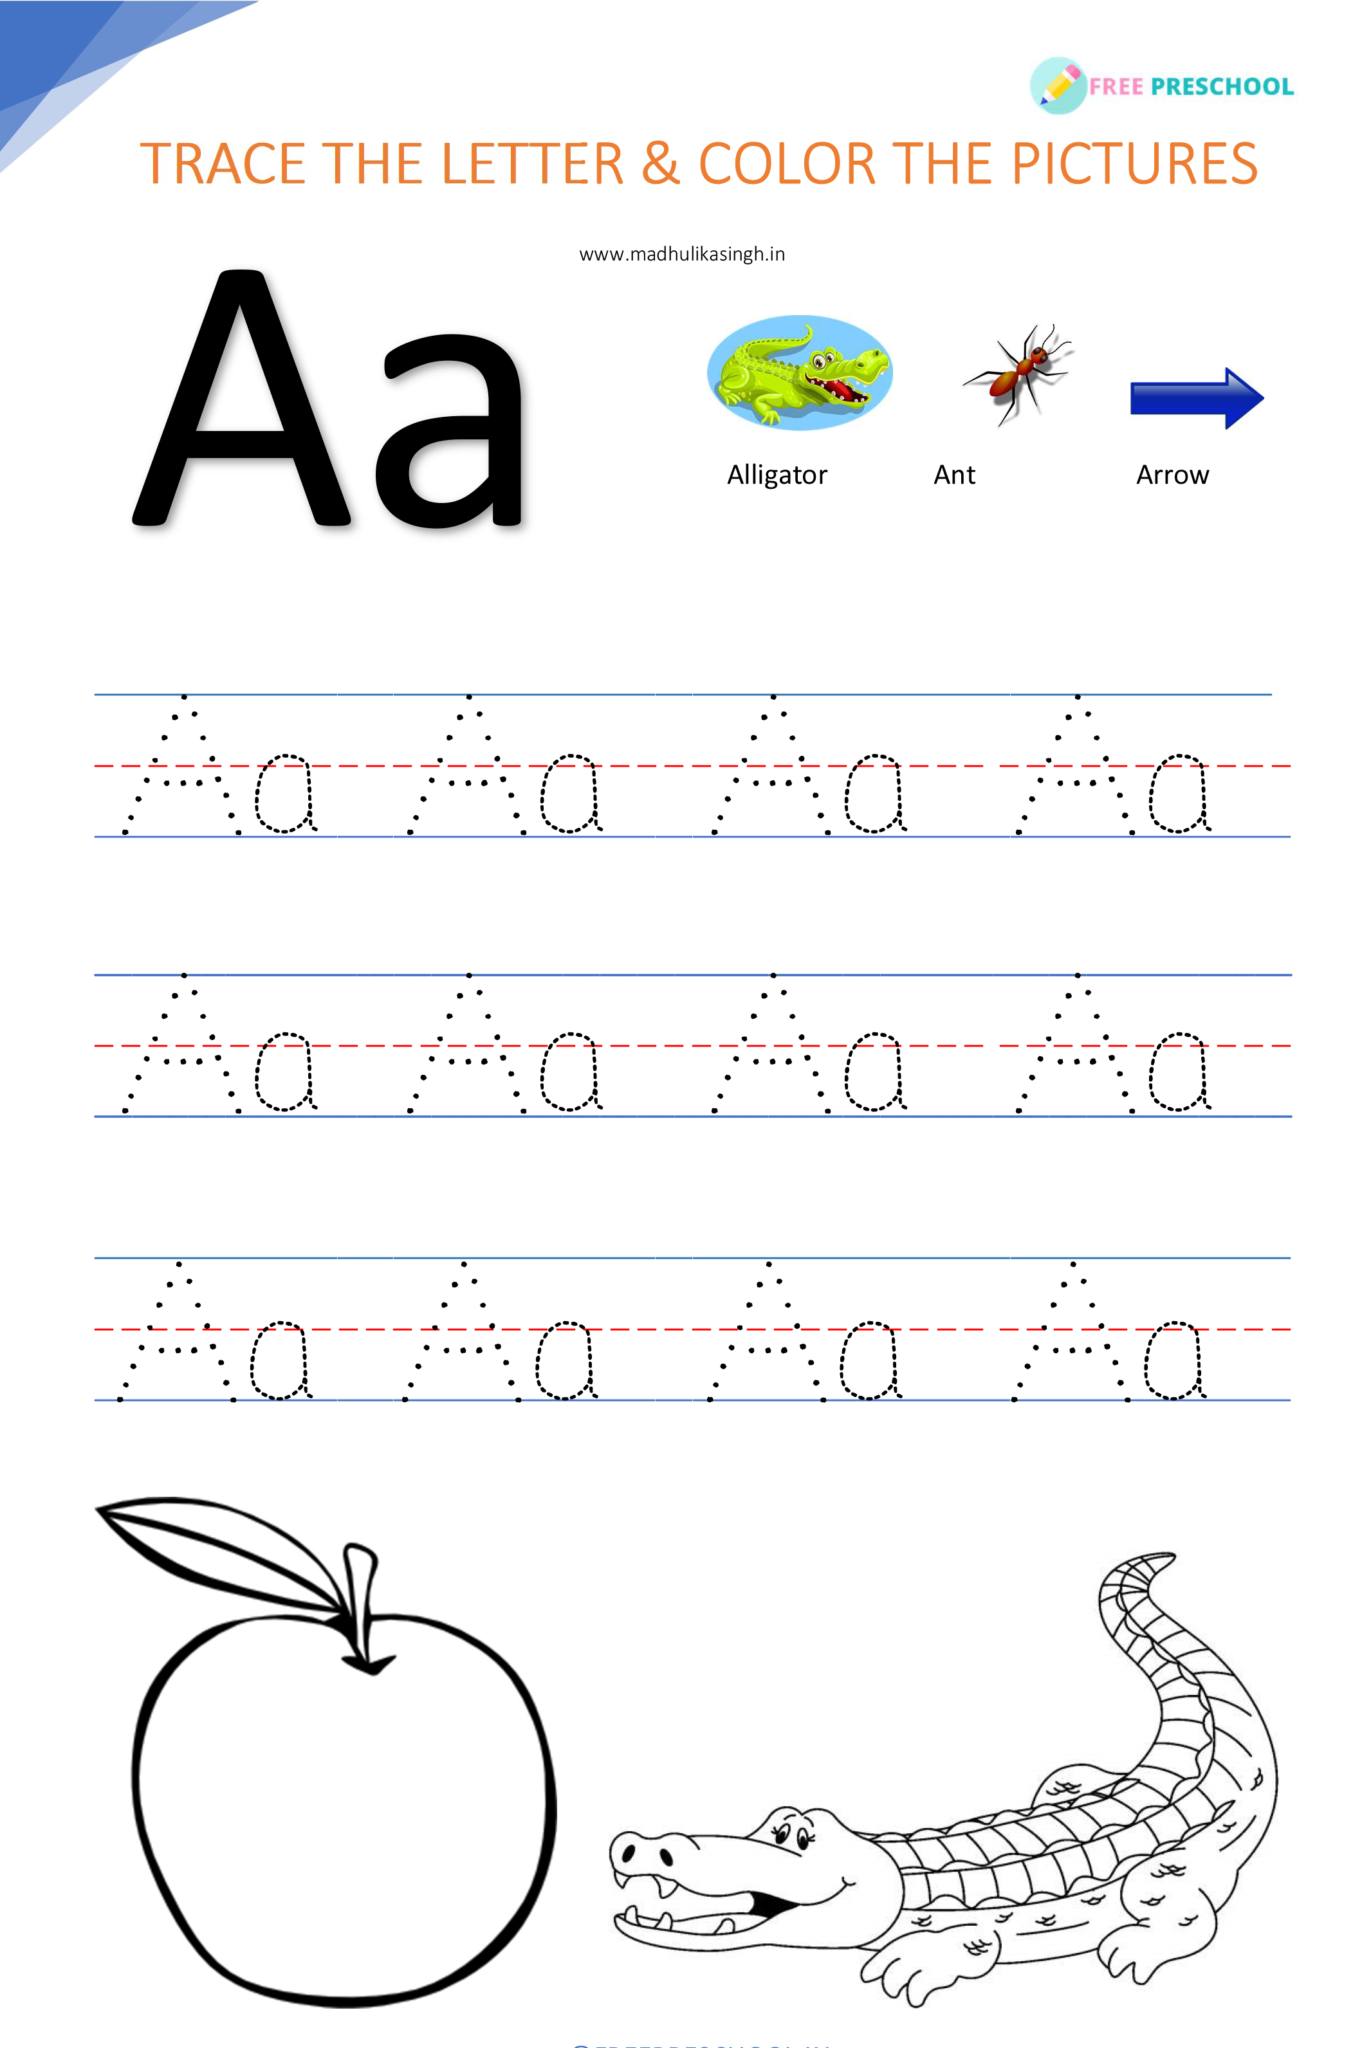 alphabet-for-tracing-free-preschool